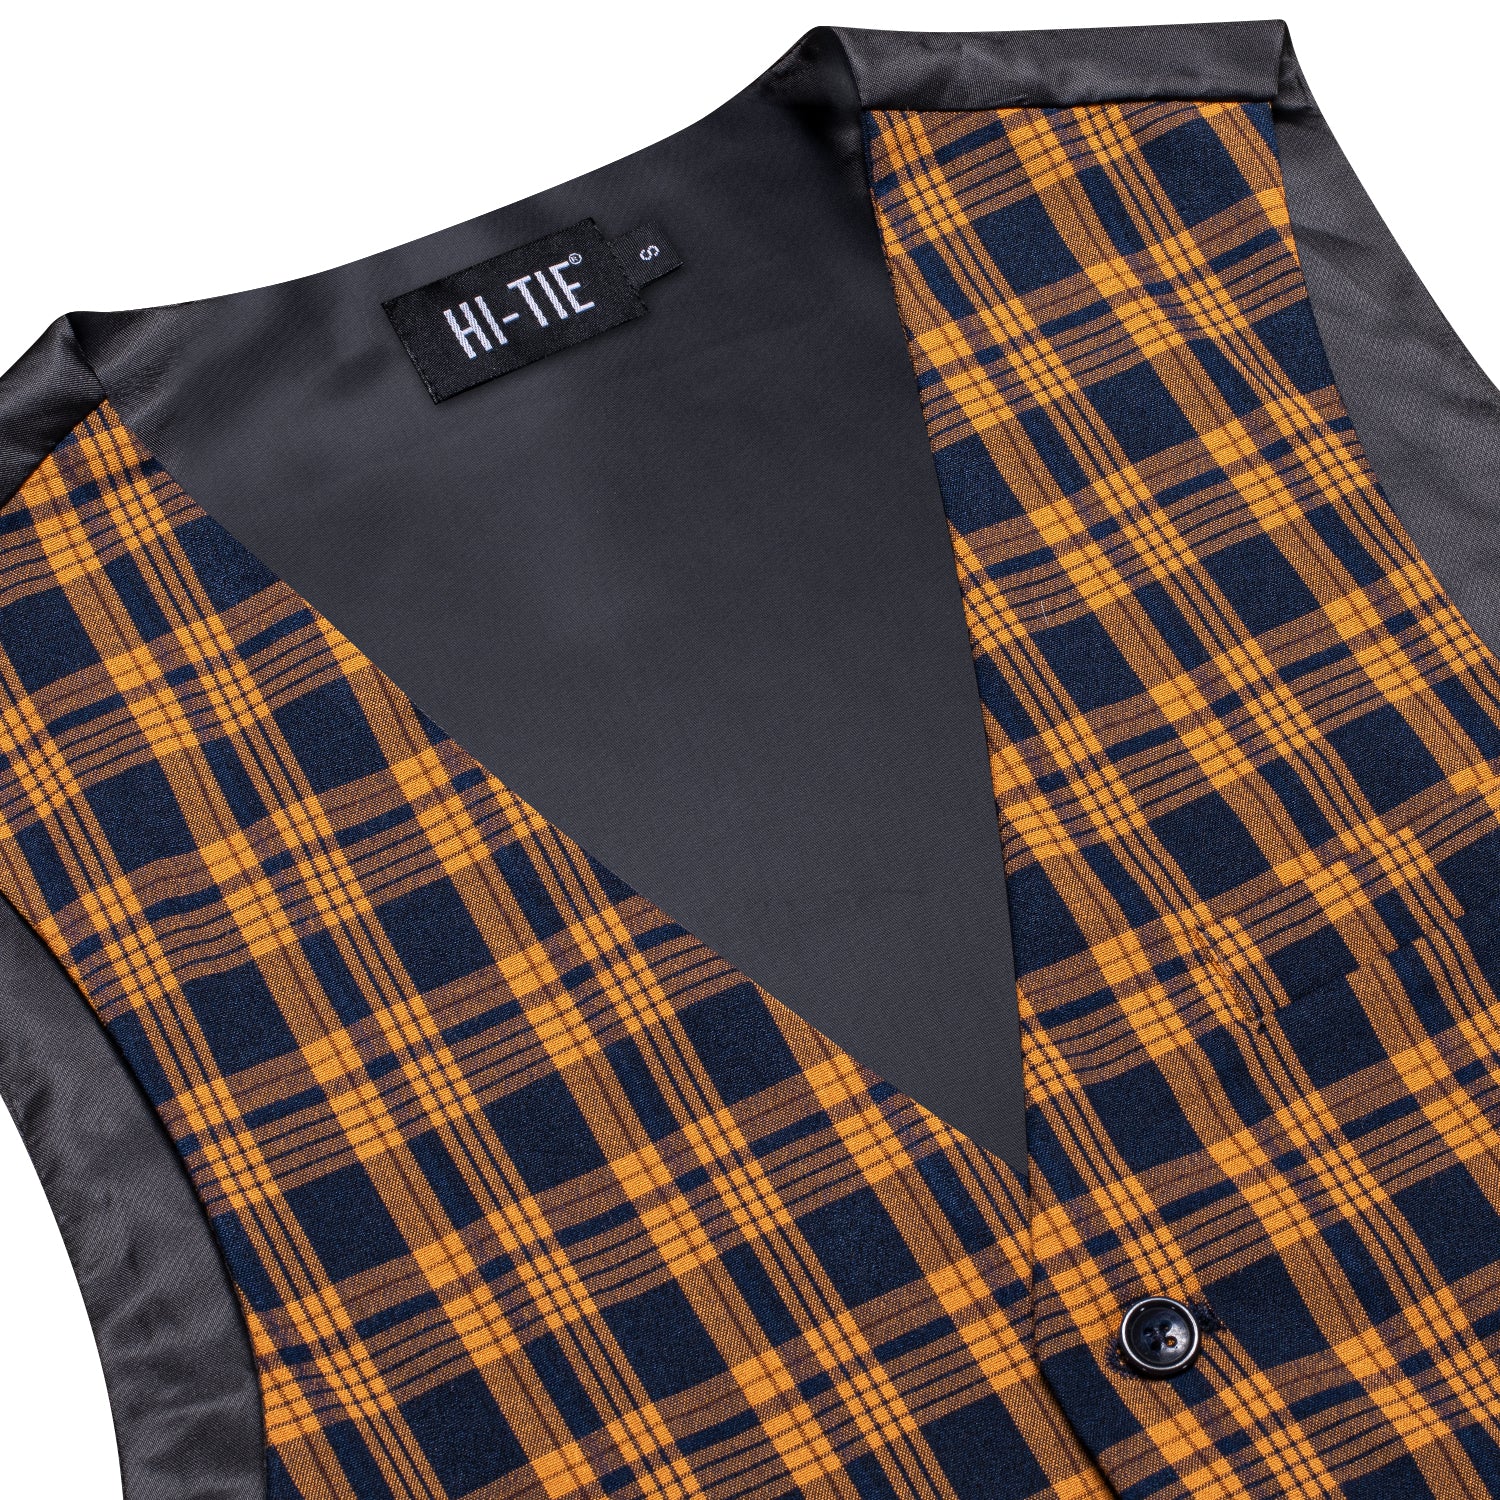 Black Orange Plaid Silk England Style Men's Single Vest Waistcoat